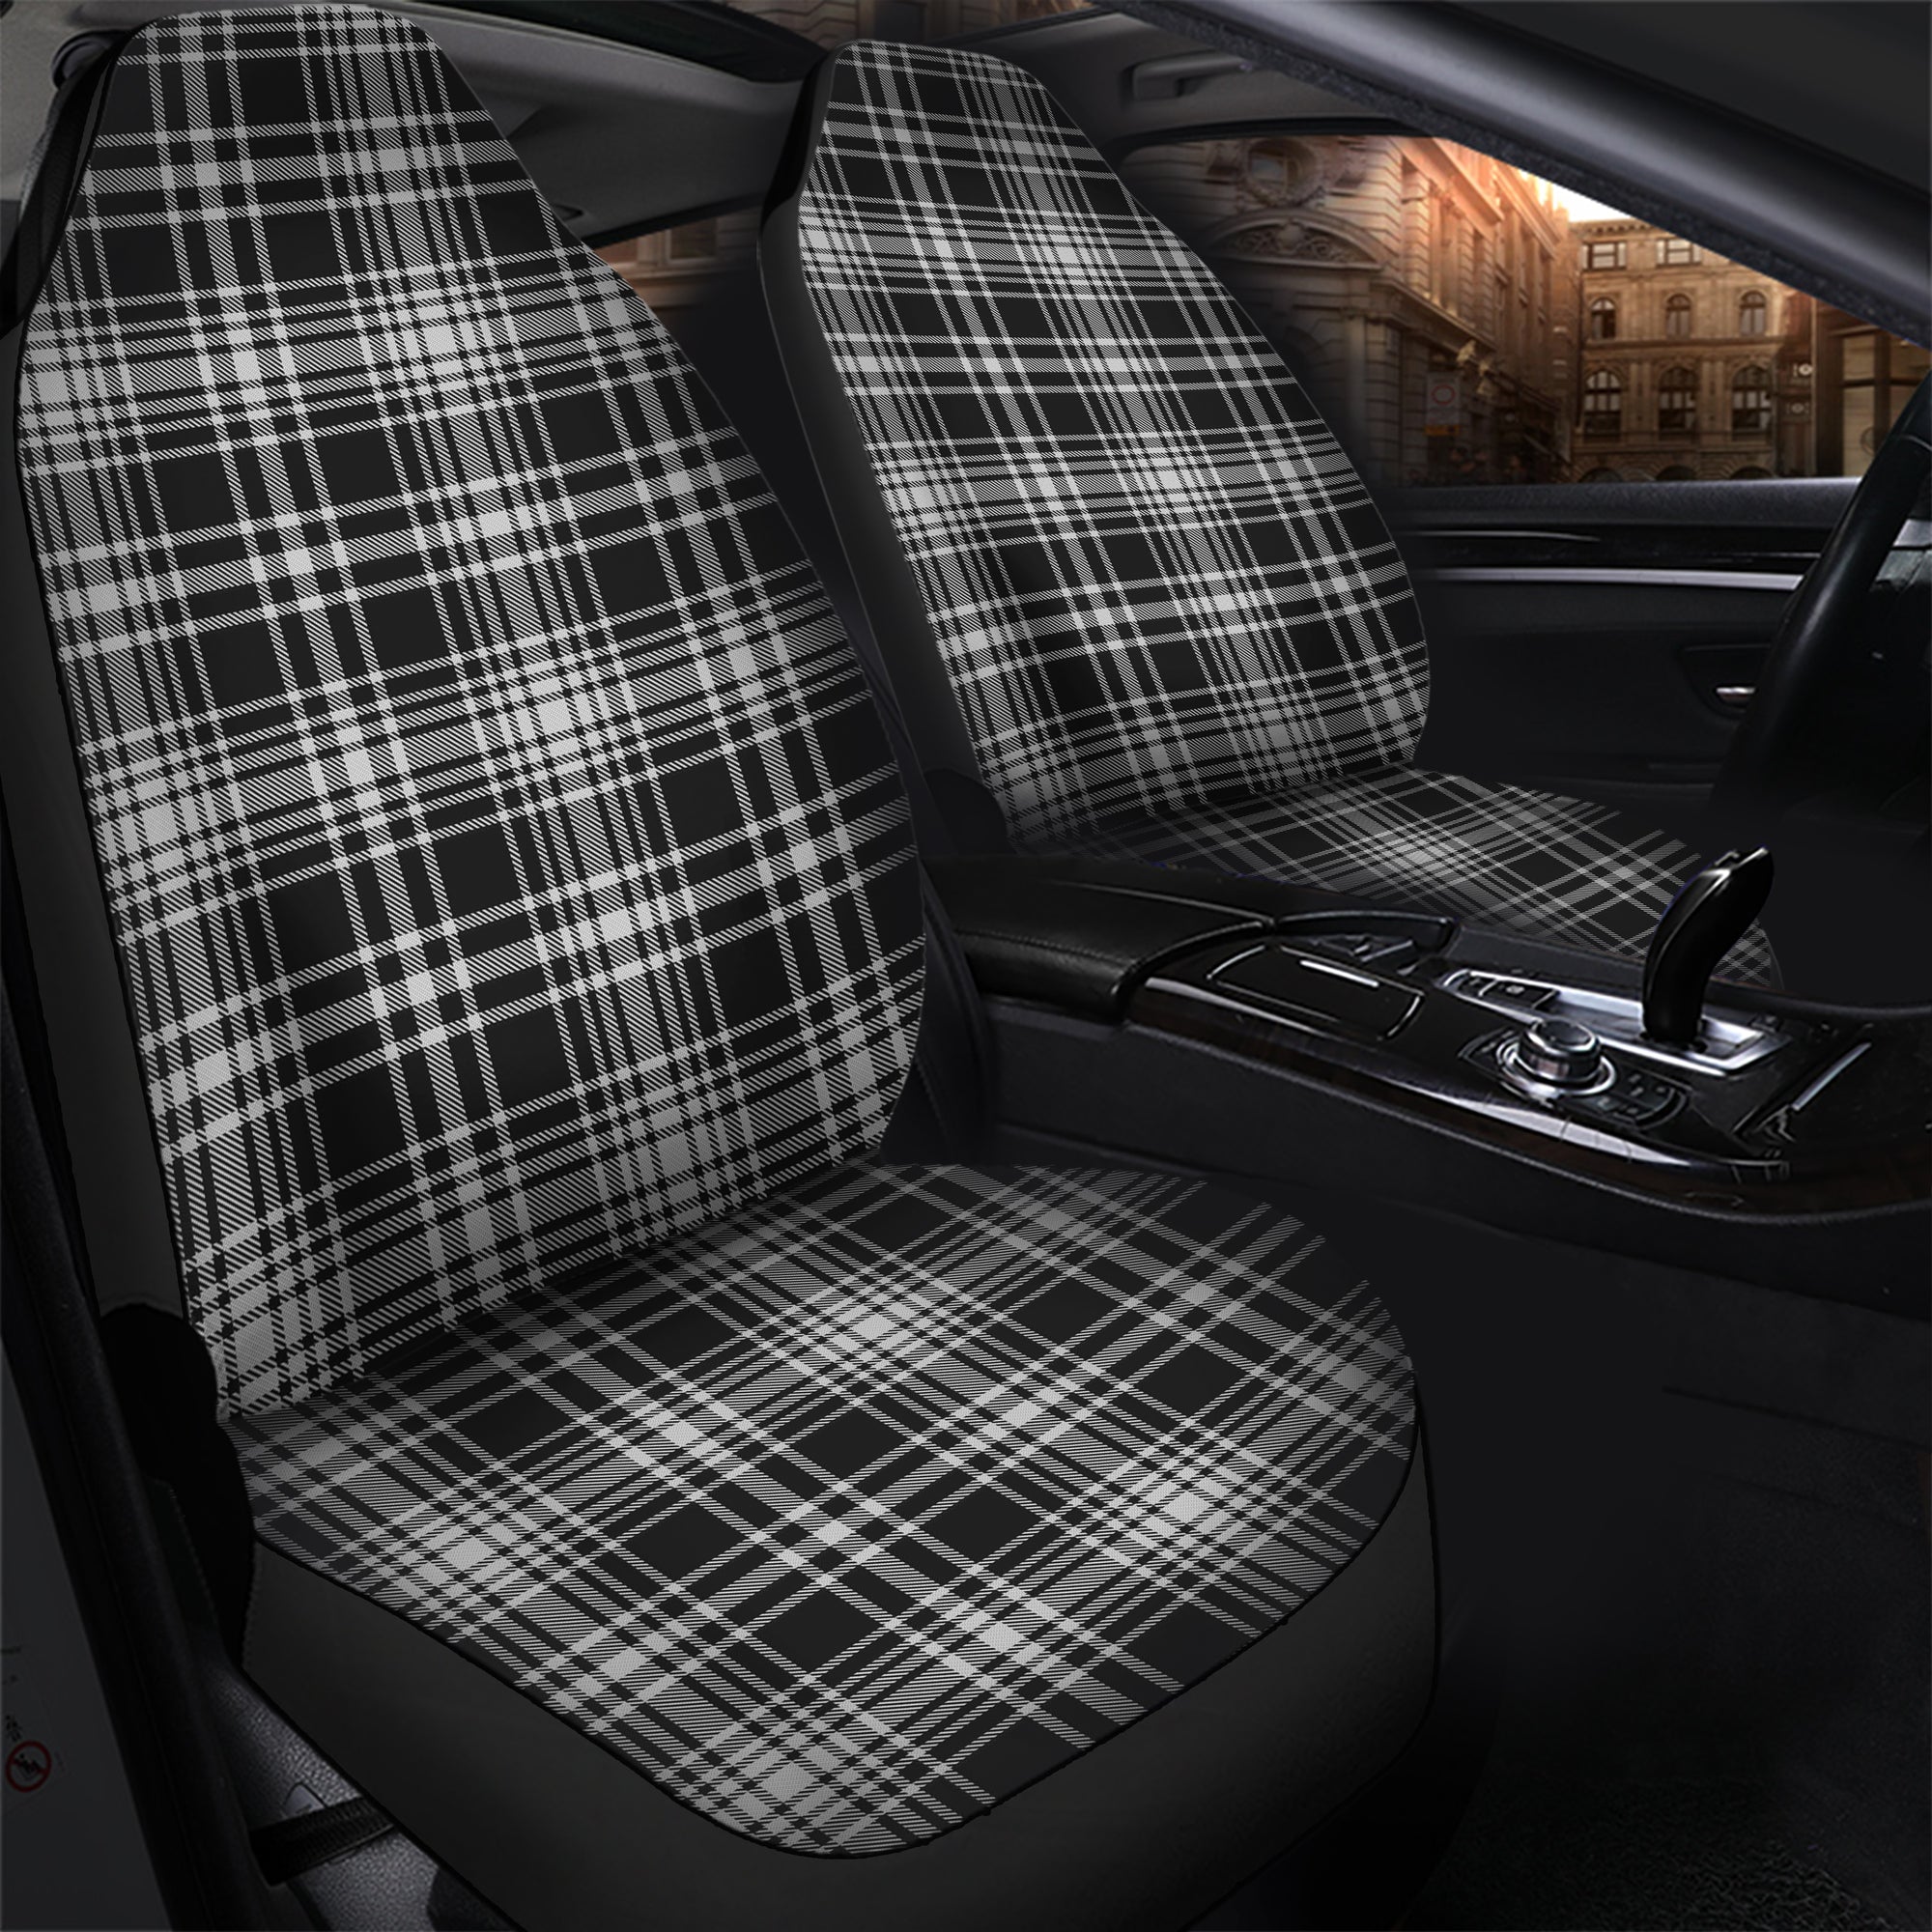 scottish-maclean-black-and-white-clan-tartan-car-seat-cover